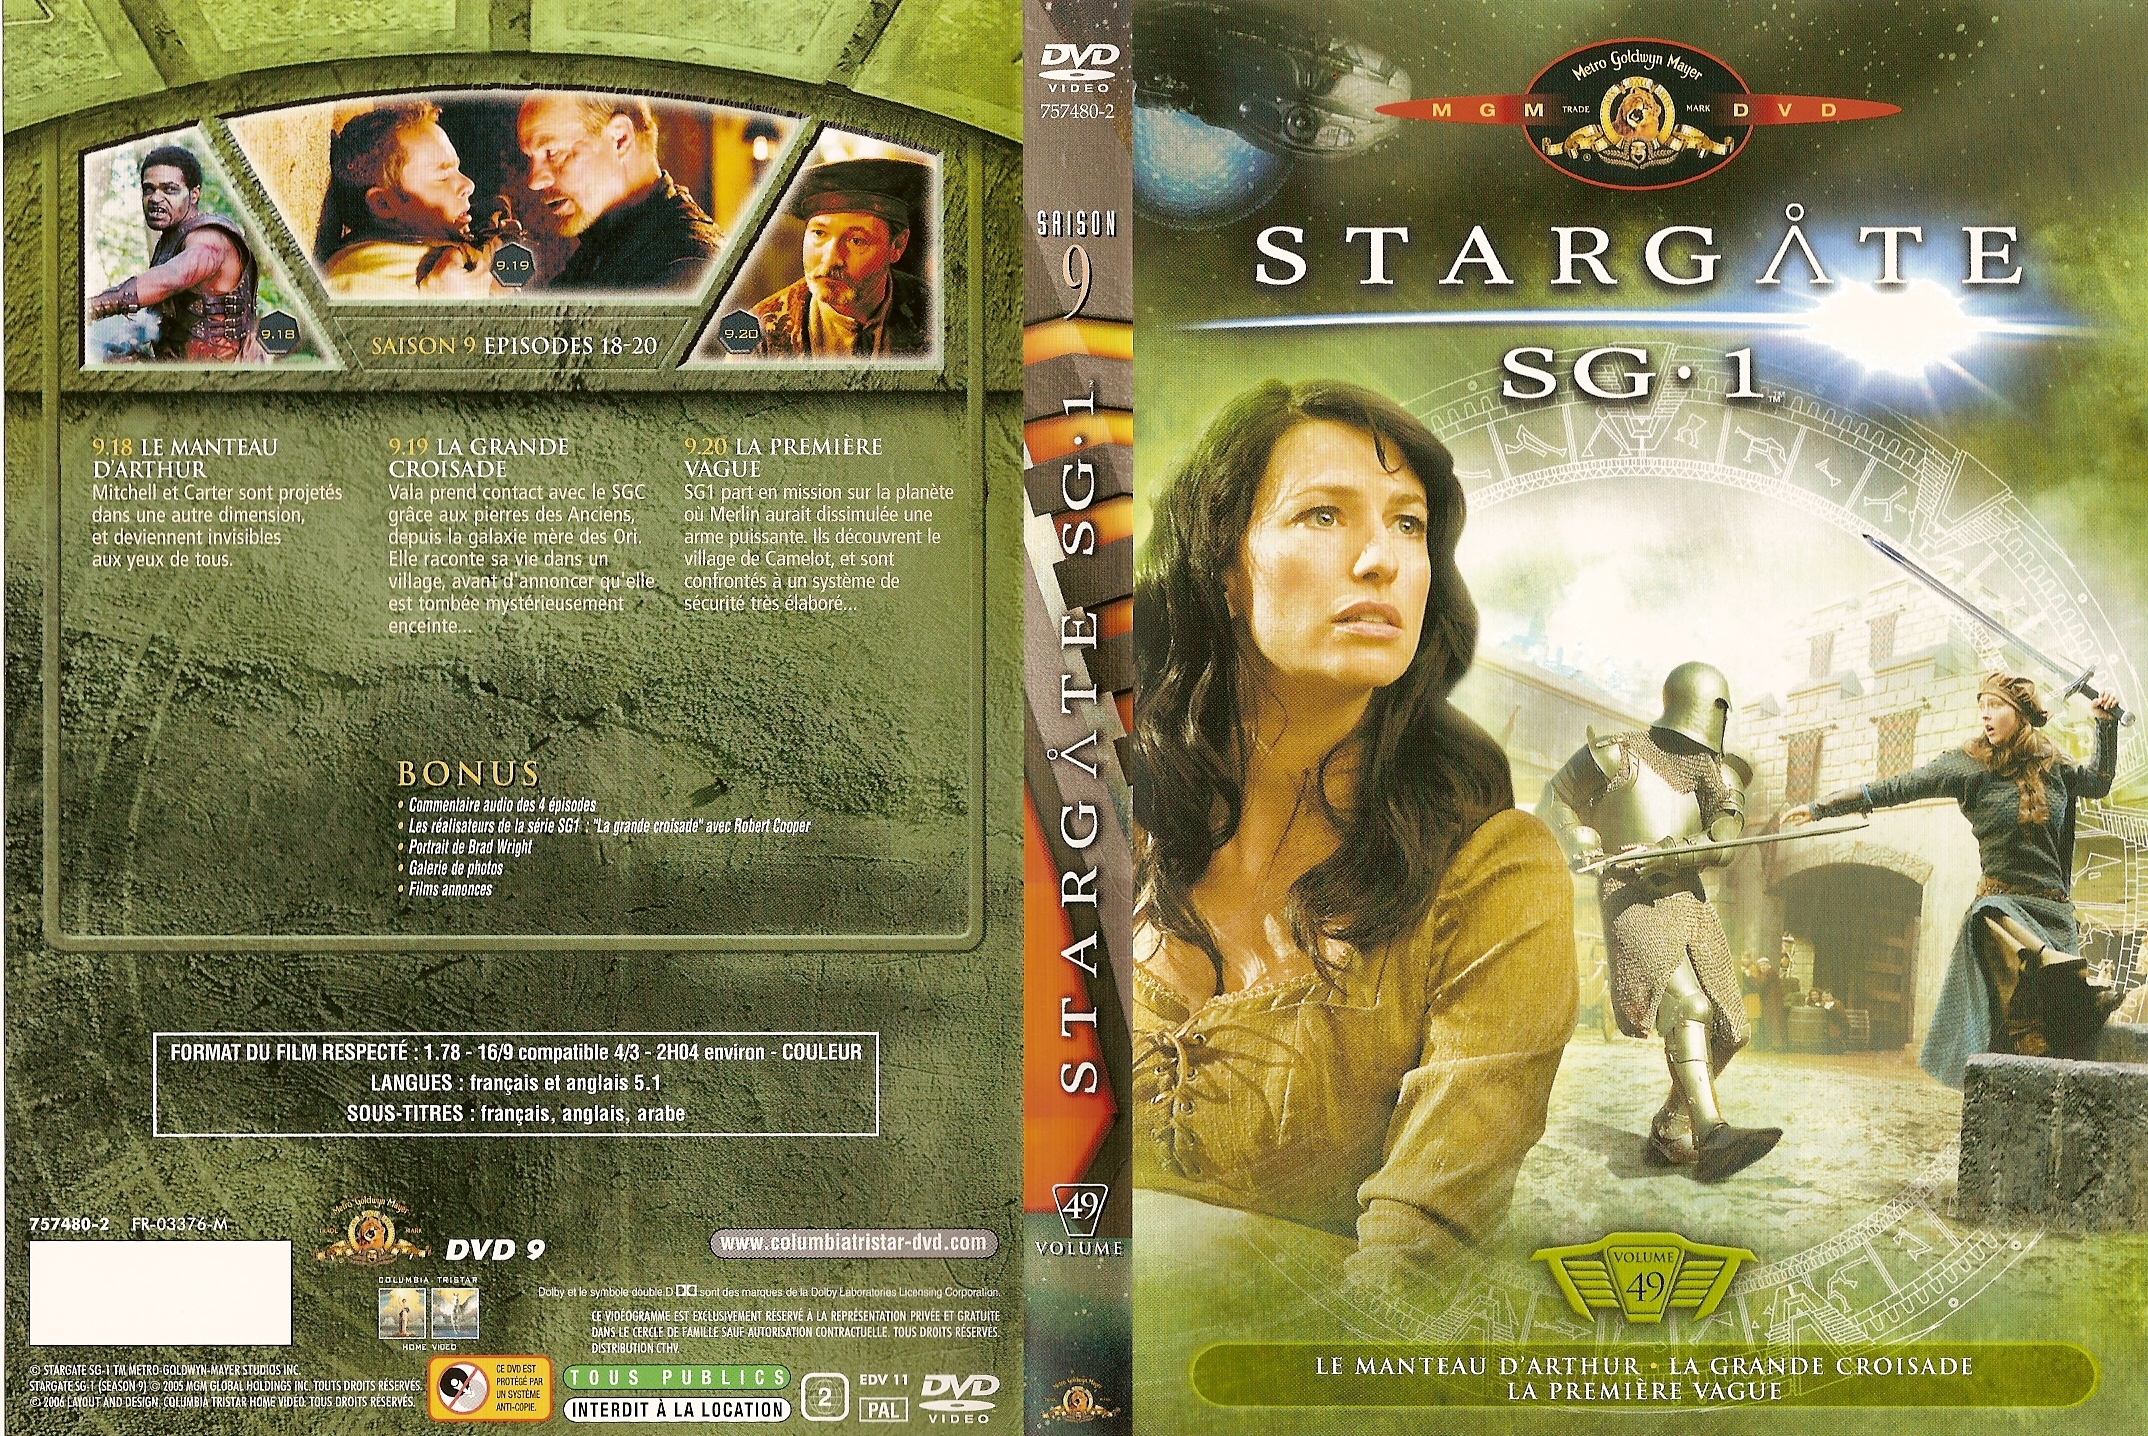 Jaquette DVD Stargate SG1 vol 49